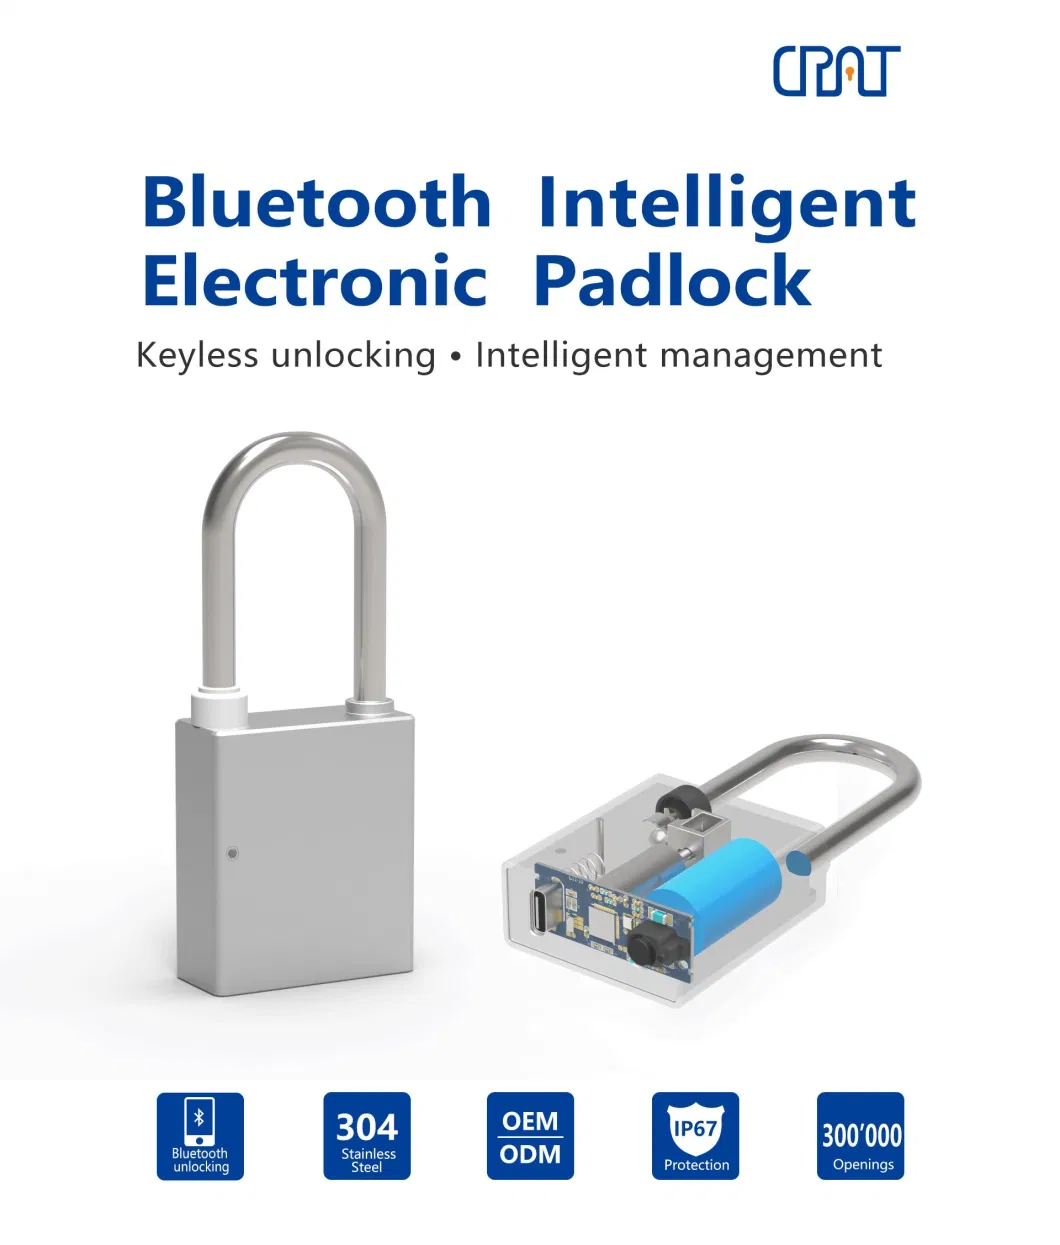 Mobile Cotorlled Bluetooth Padlock Outdoor Door Locks Lock Unlock Record Top Security